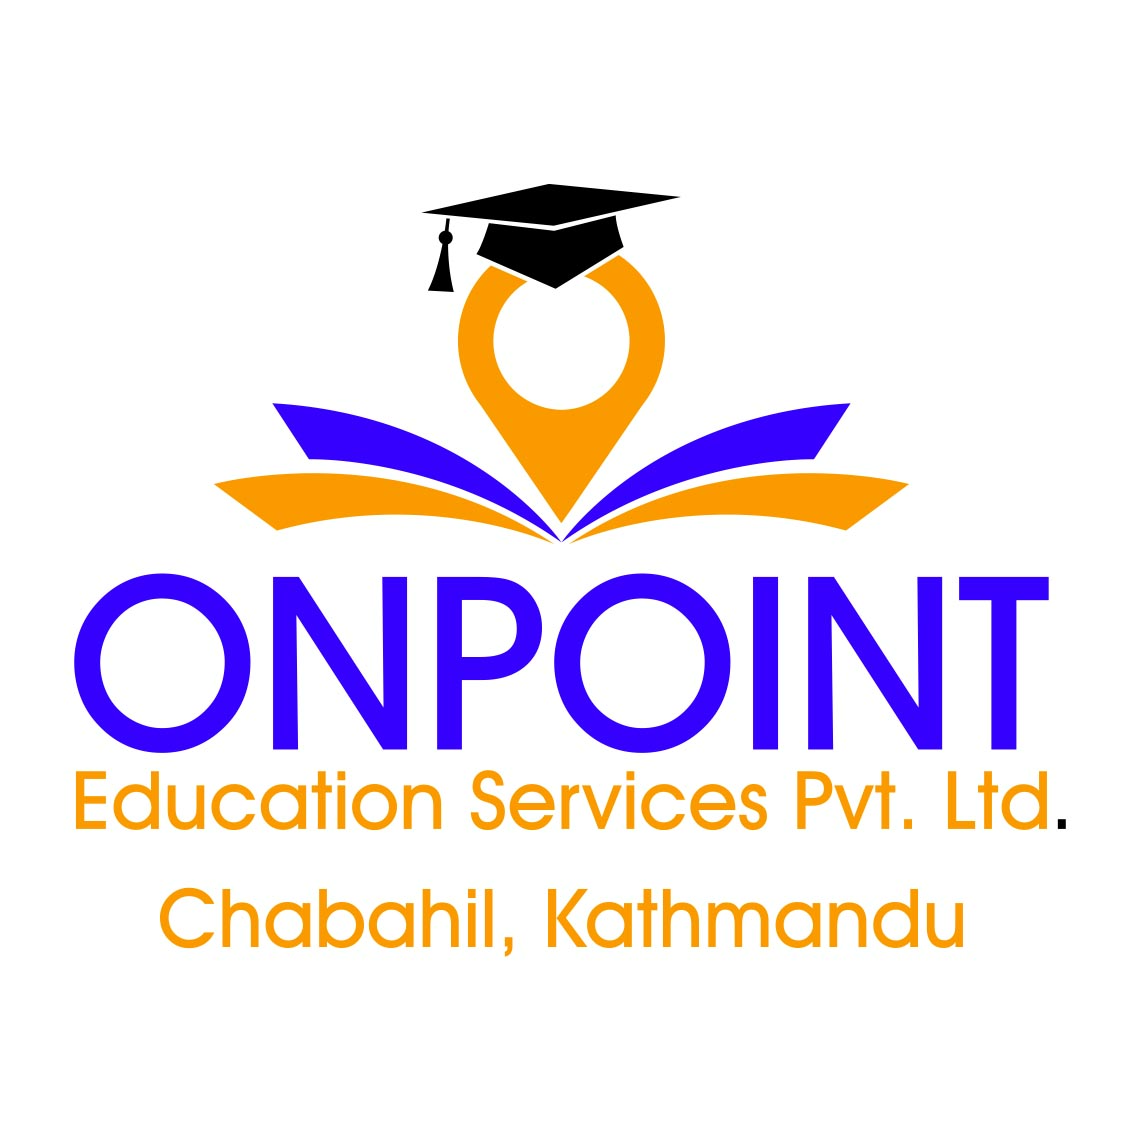 Onpoint Education Services Pvt. Ltd.